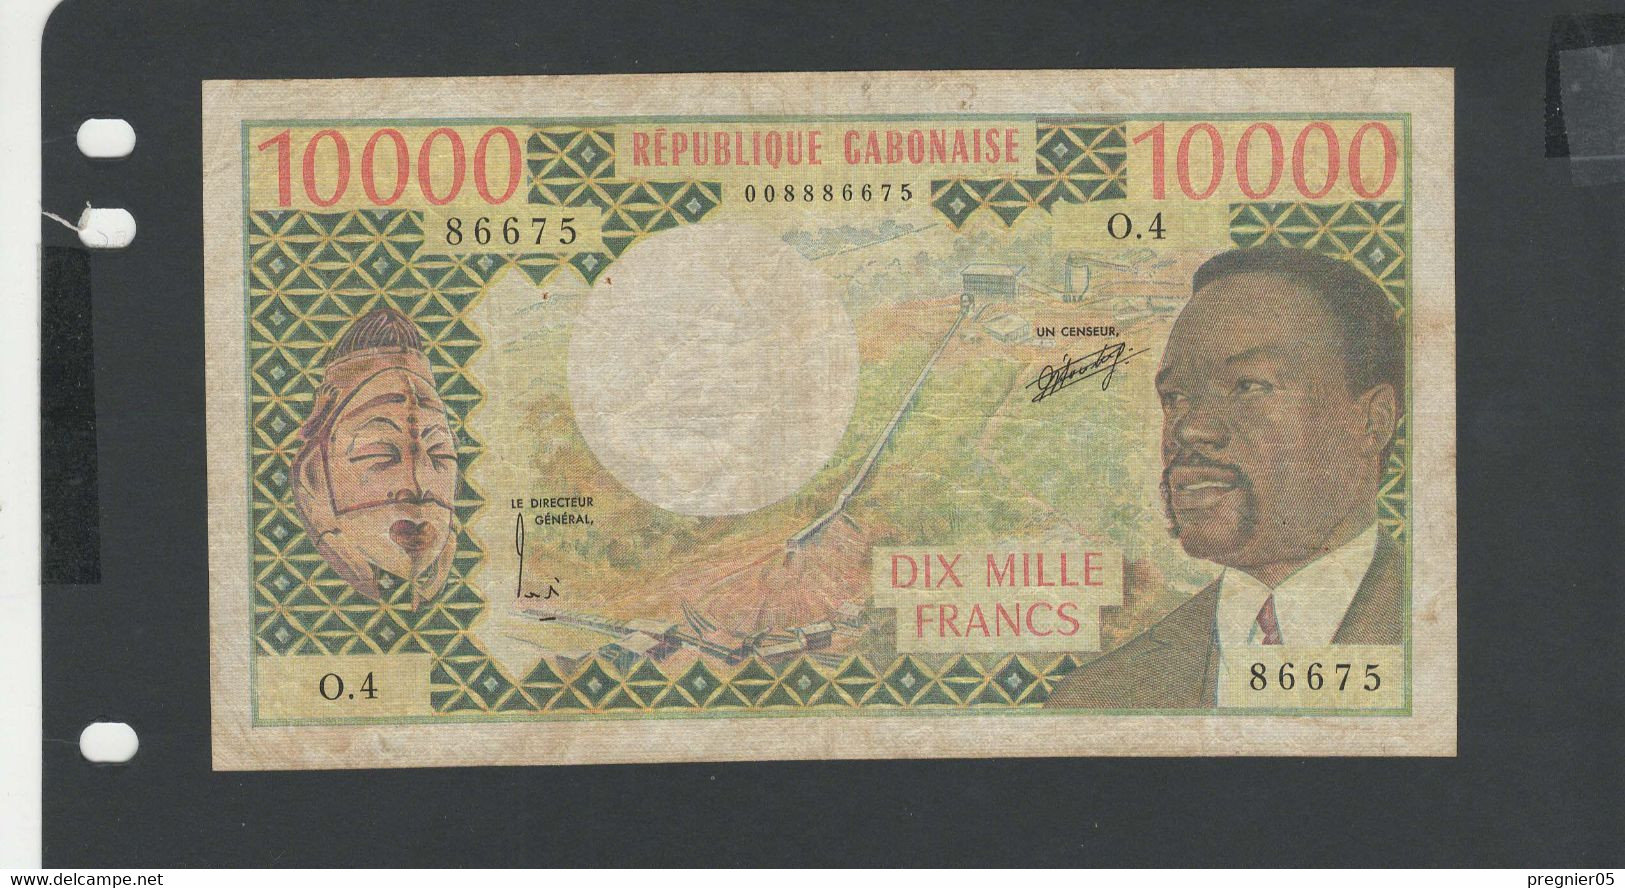 GABON - Billet 10000 Francs 1971 TB+/VF+ Pick-01 - Gabun